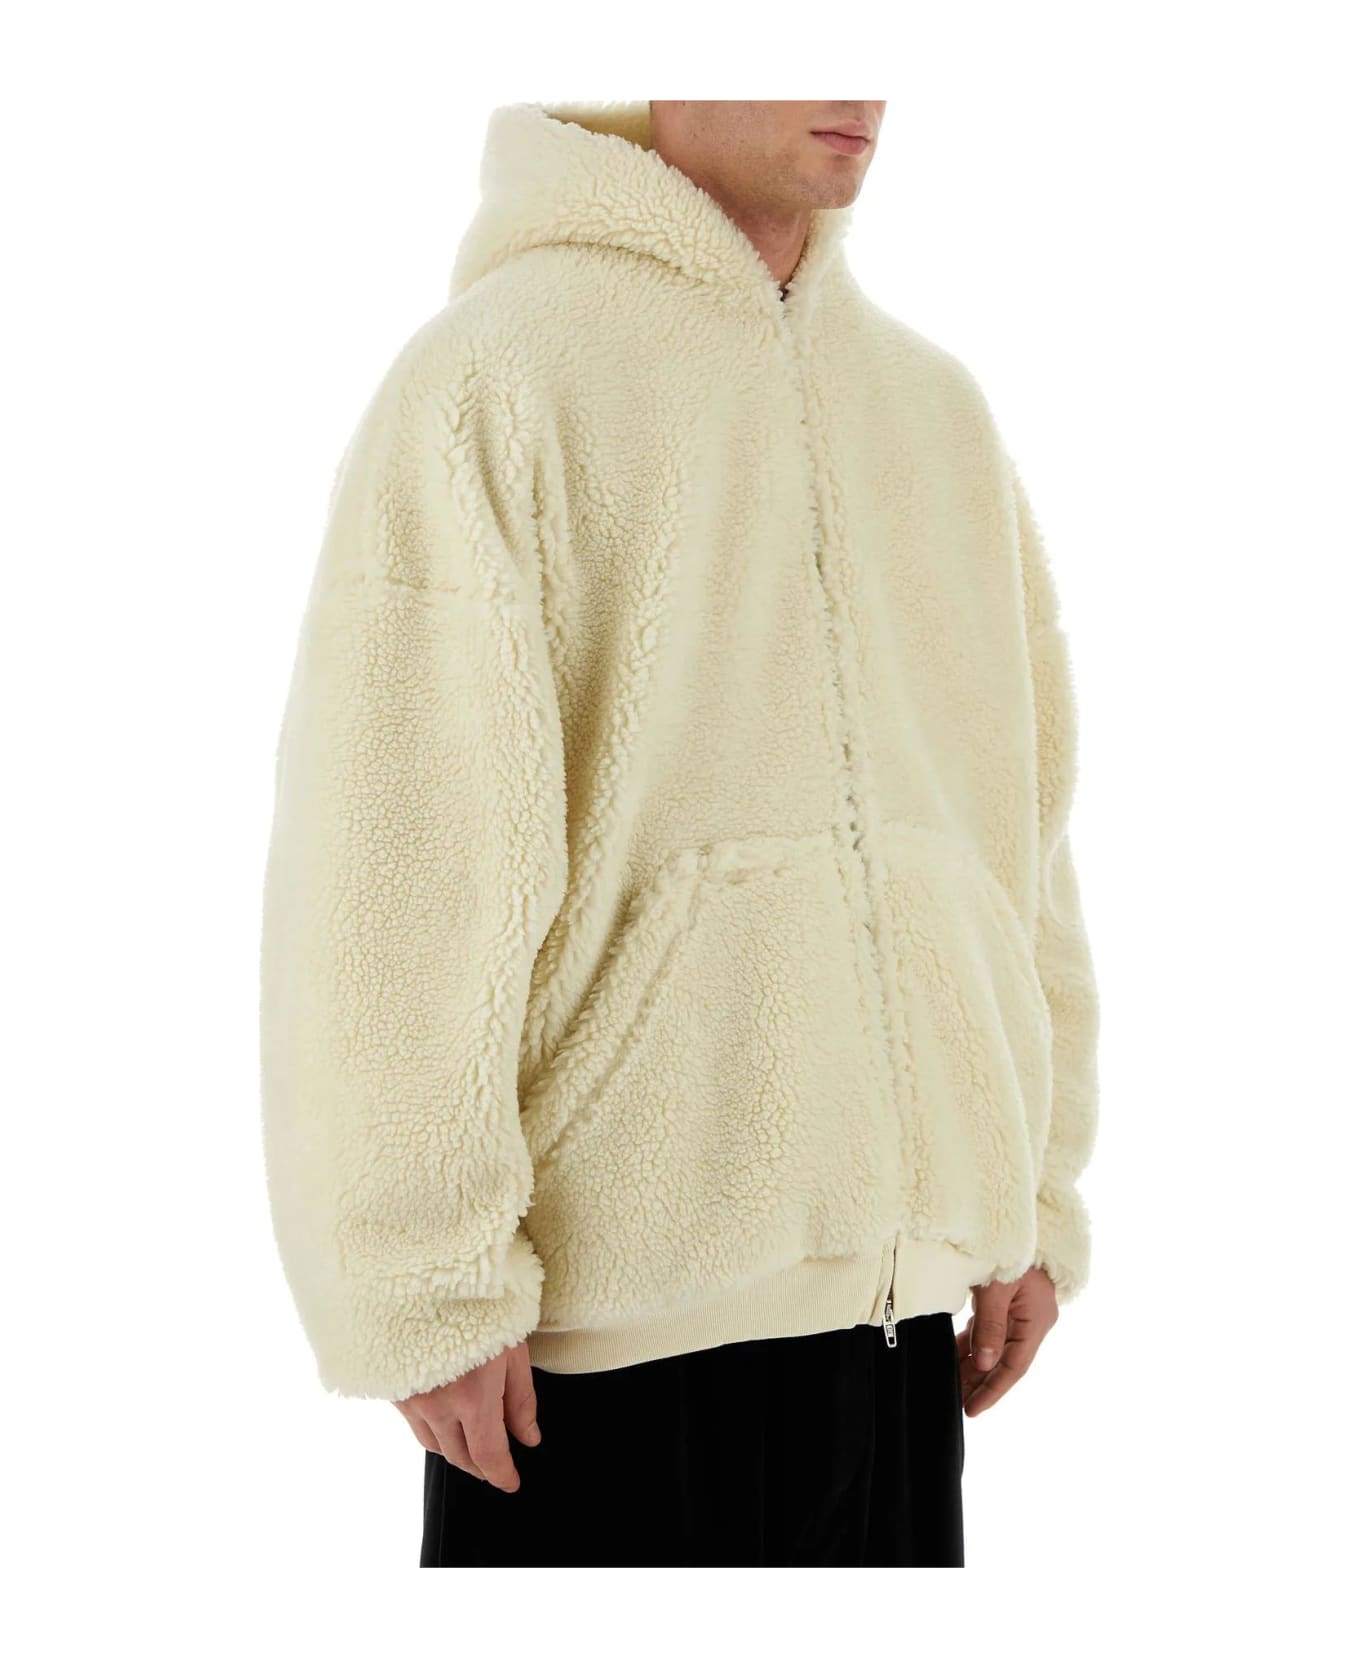 Balenciaga Ivory Teddy Oversize Sweatshirt - IVORY